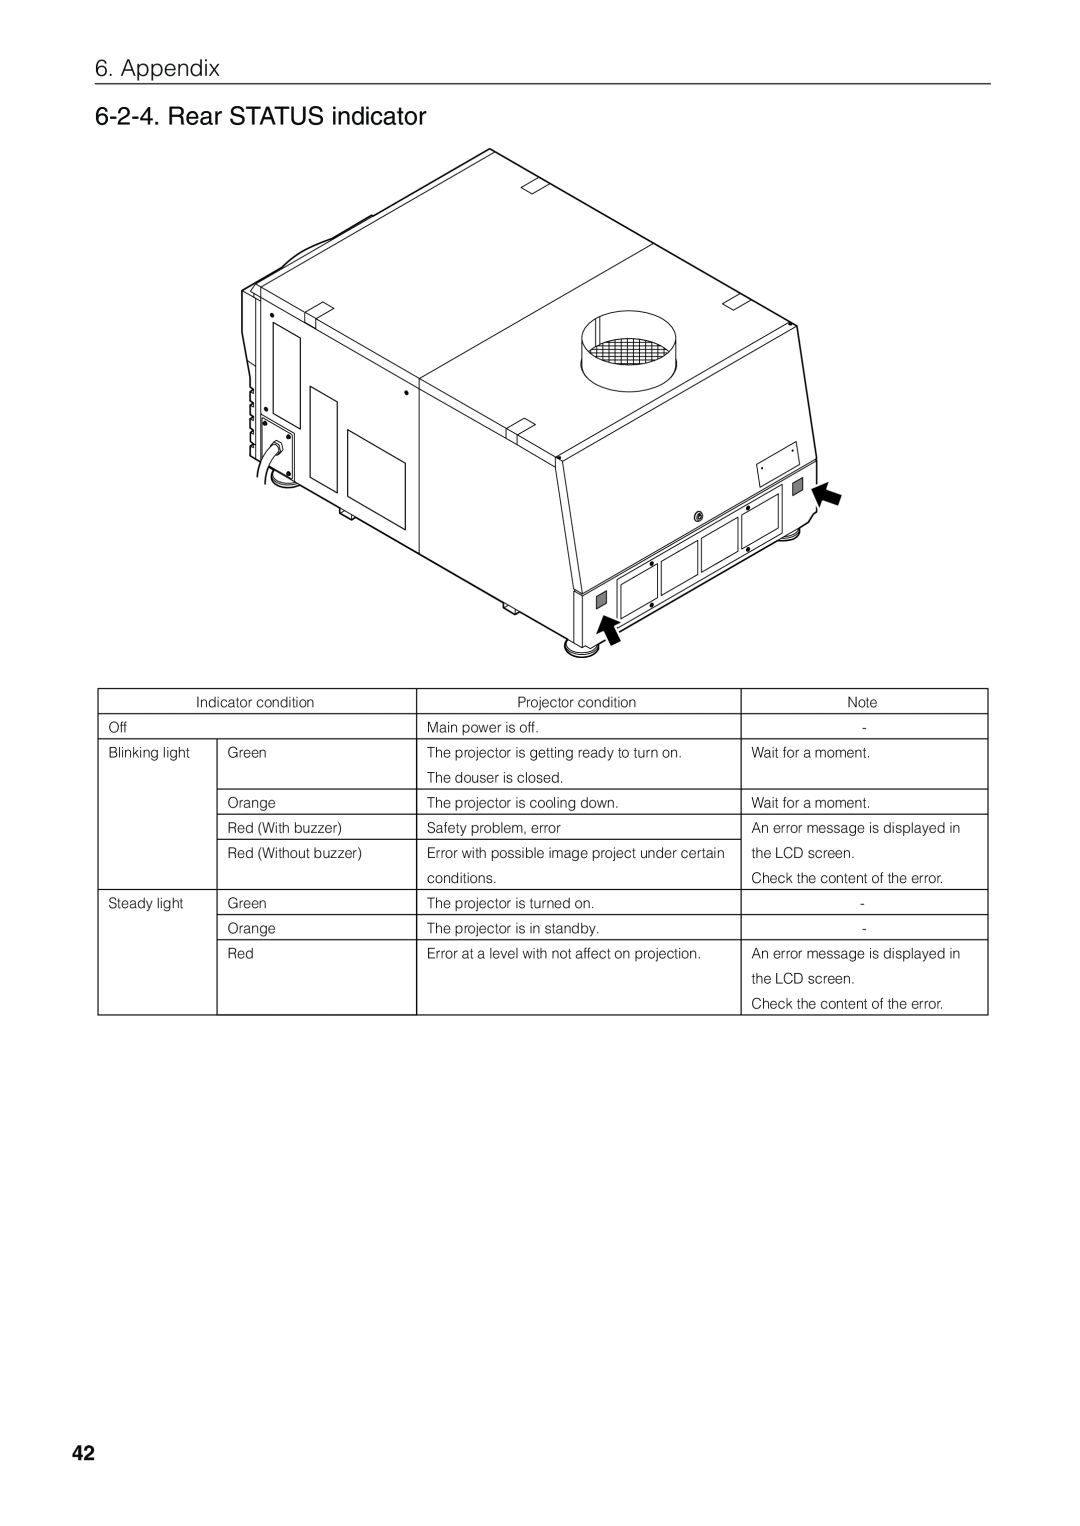 NEC NC1600C user manual Rear STATUS indicator, Appendix 